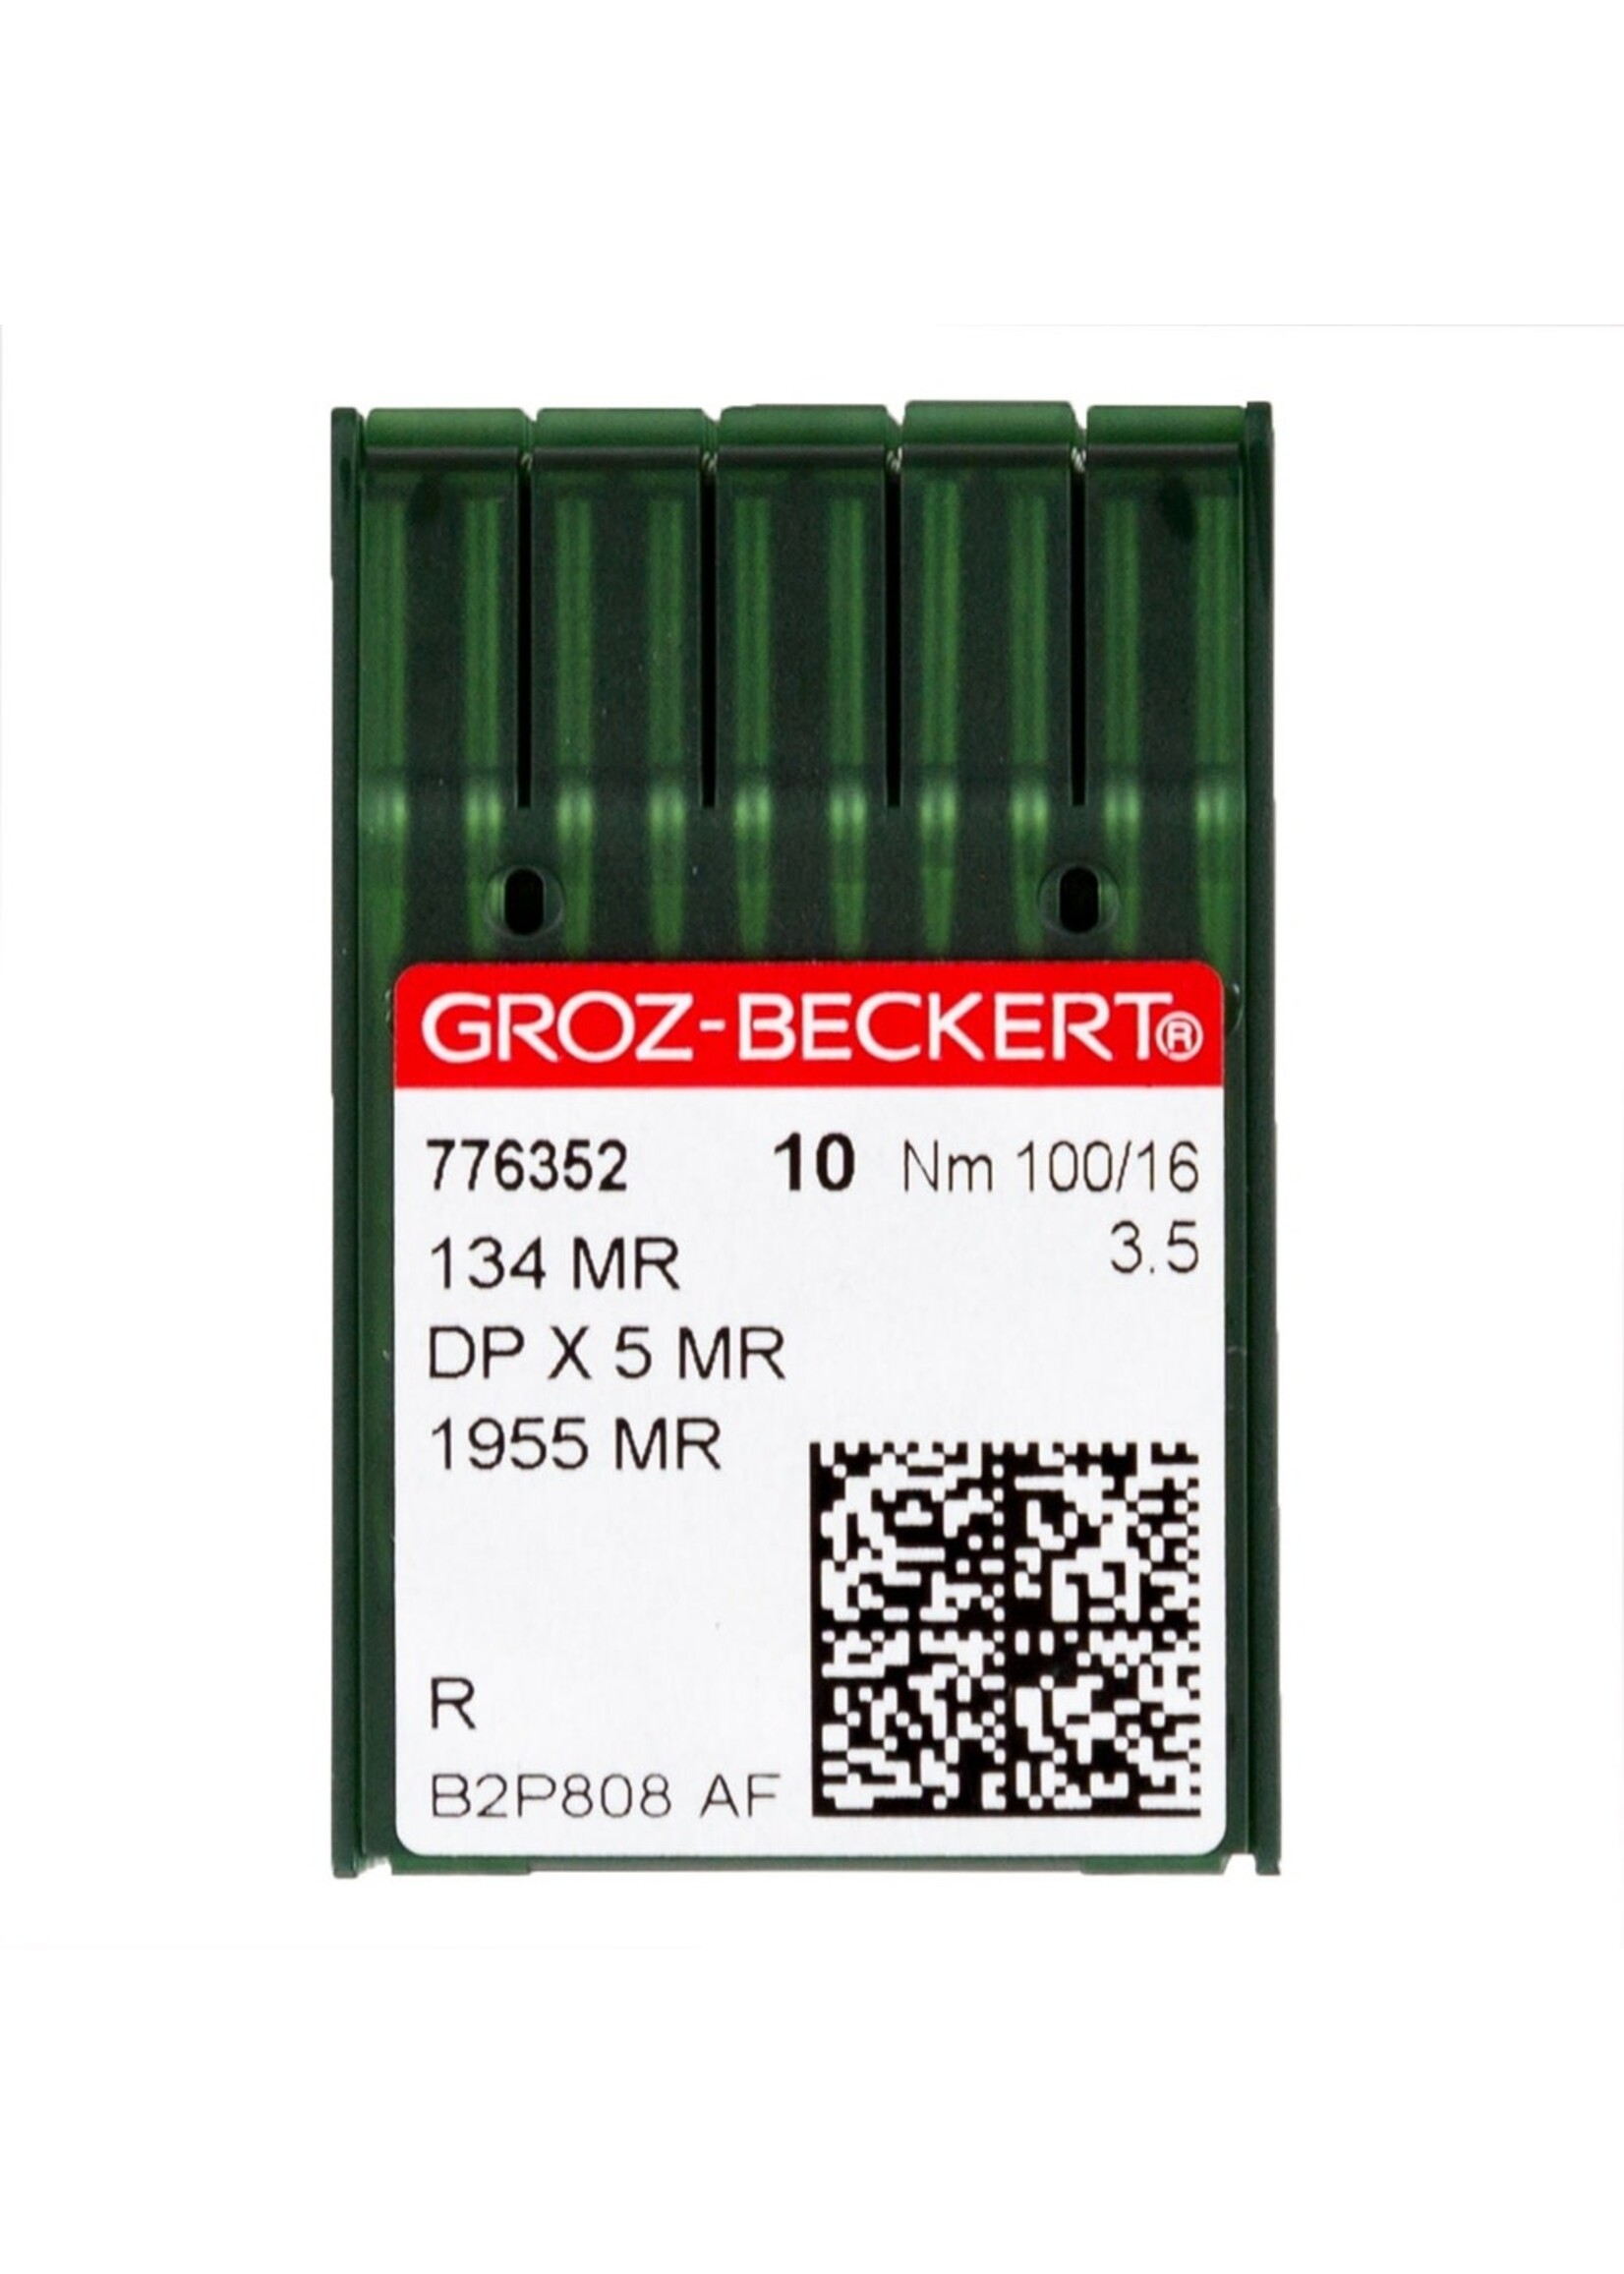 Groz-Beckert Needle MR 3.5 Sharp Set of 10